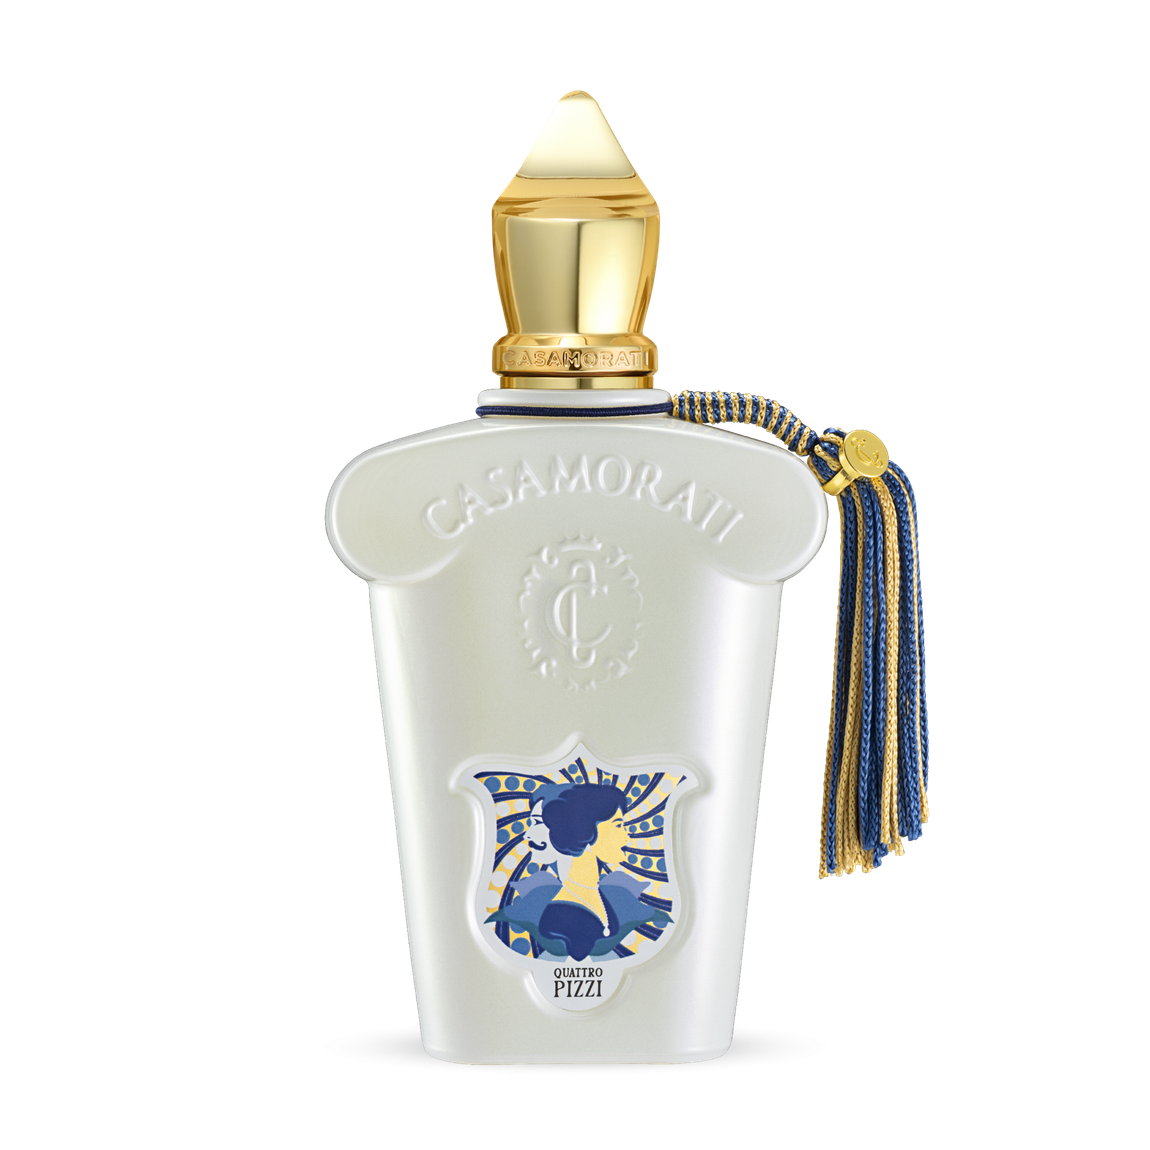 CASAMORATI QUATTRO PIZZI - AAFKES │ distributie van exclusieve parfums